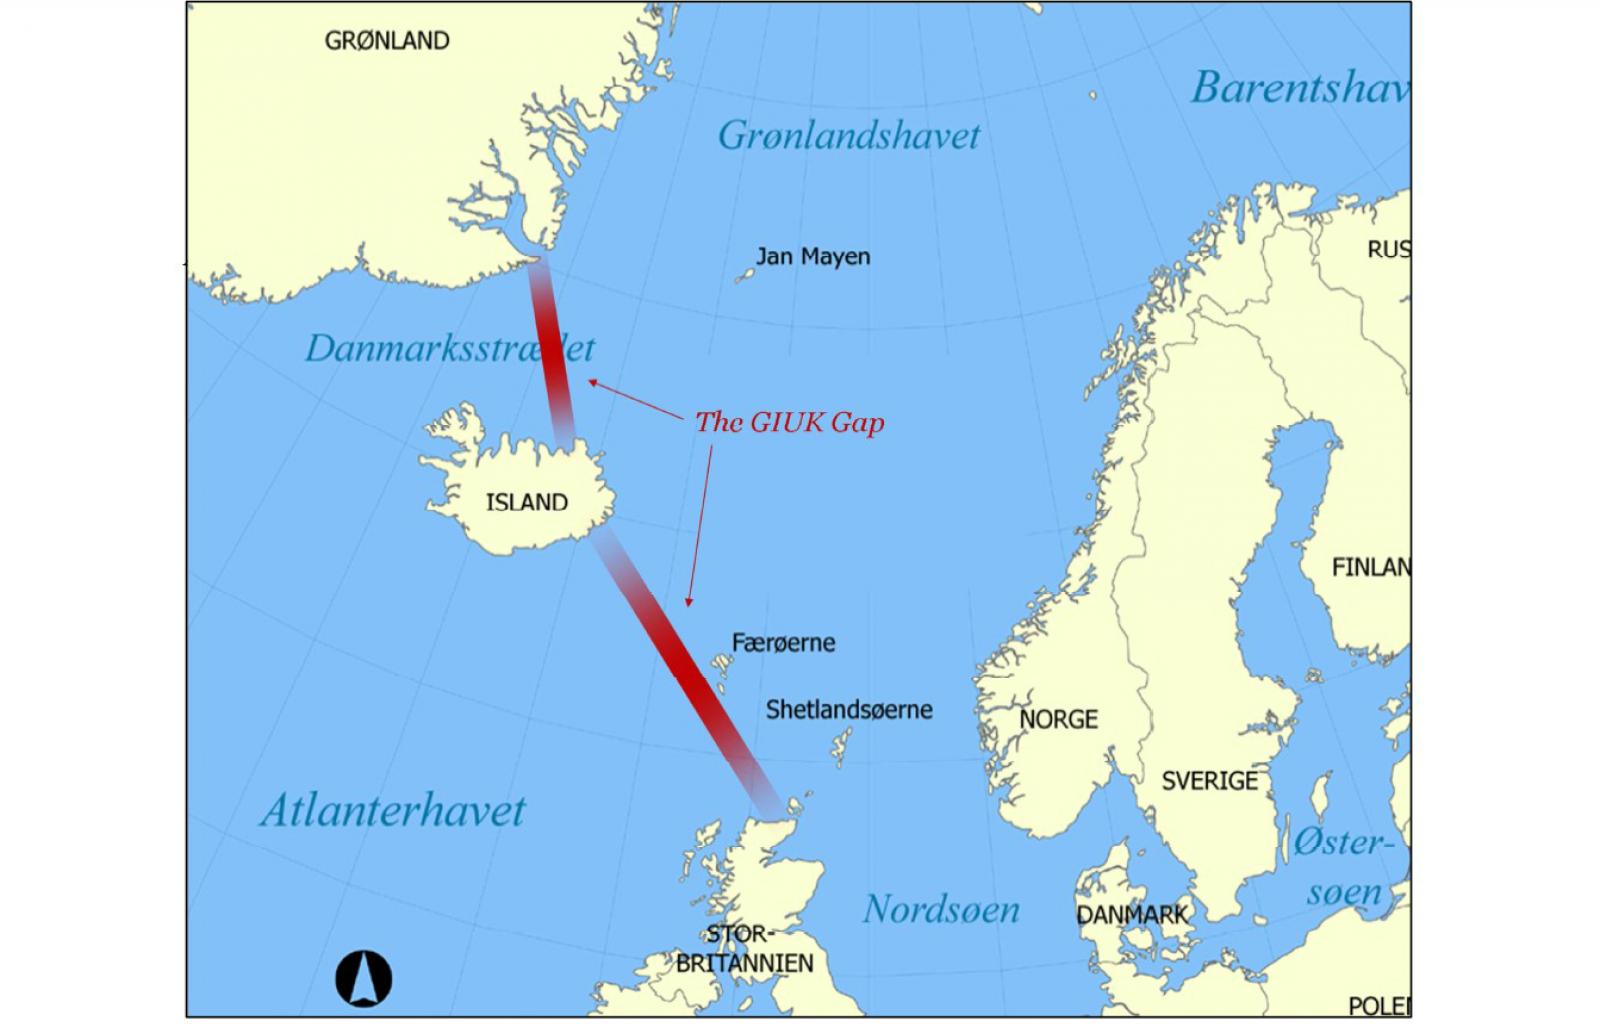 GIUK-gapet-kilde-Grønlandskortet.jpg